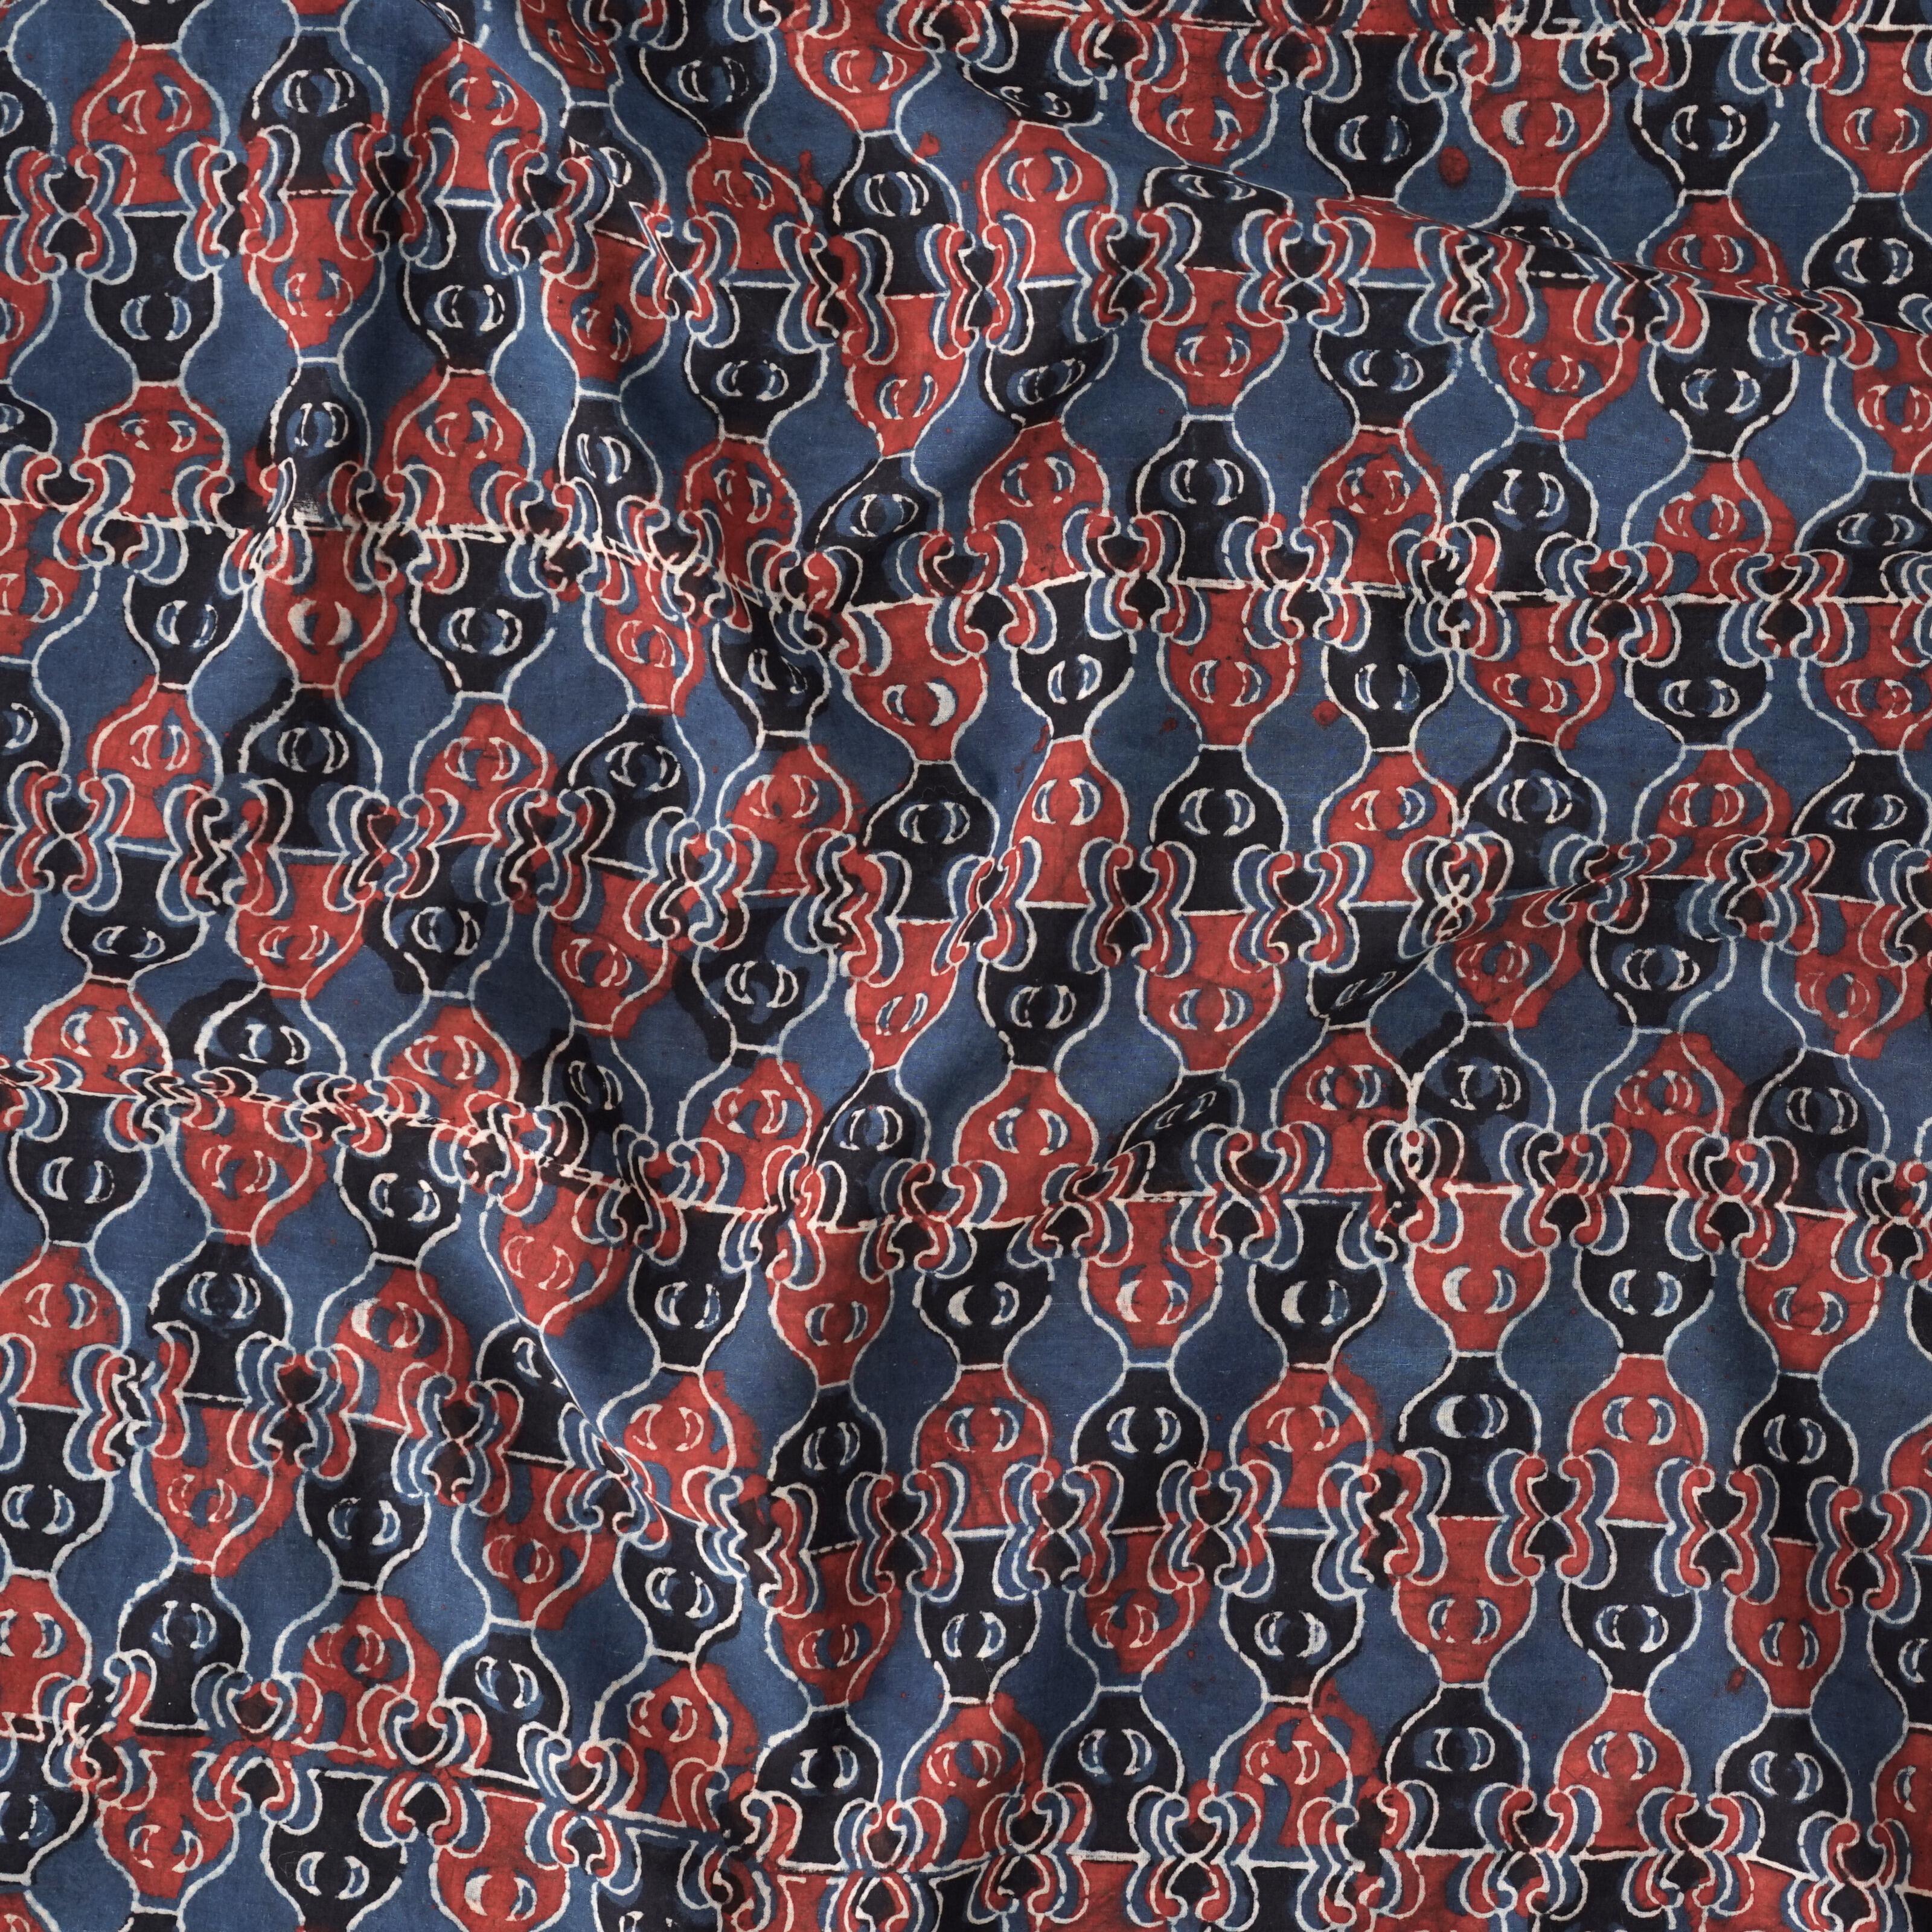 Block Printed Fabric, 100% Cotton, Ajrak Design: Indigo Blue Base, Iron Black, Madder Red Pump. Contrast